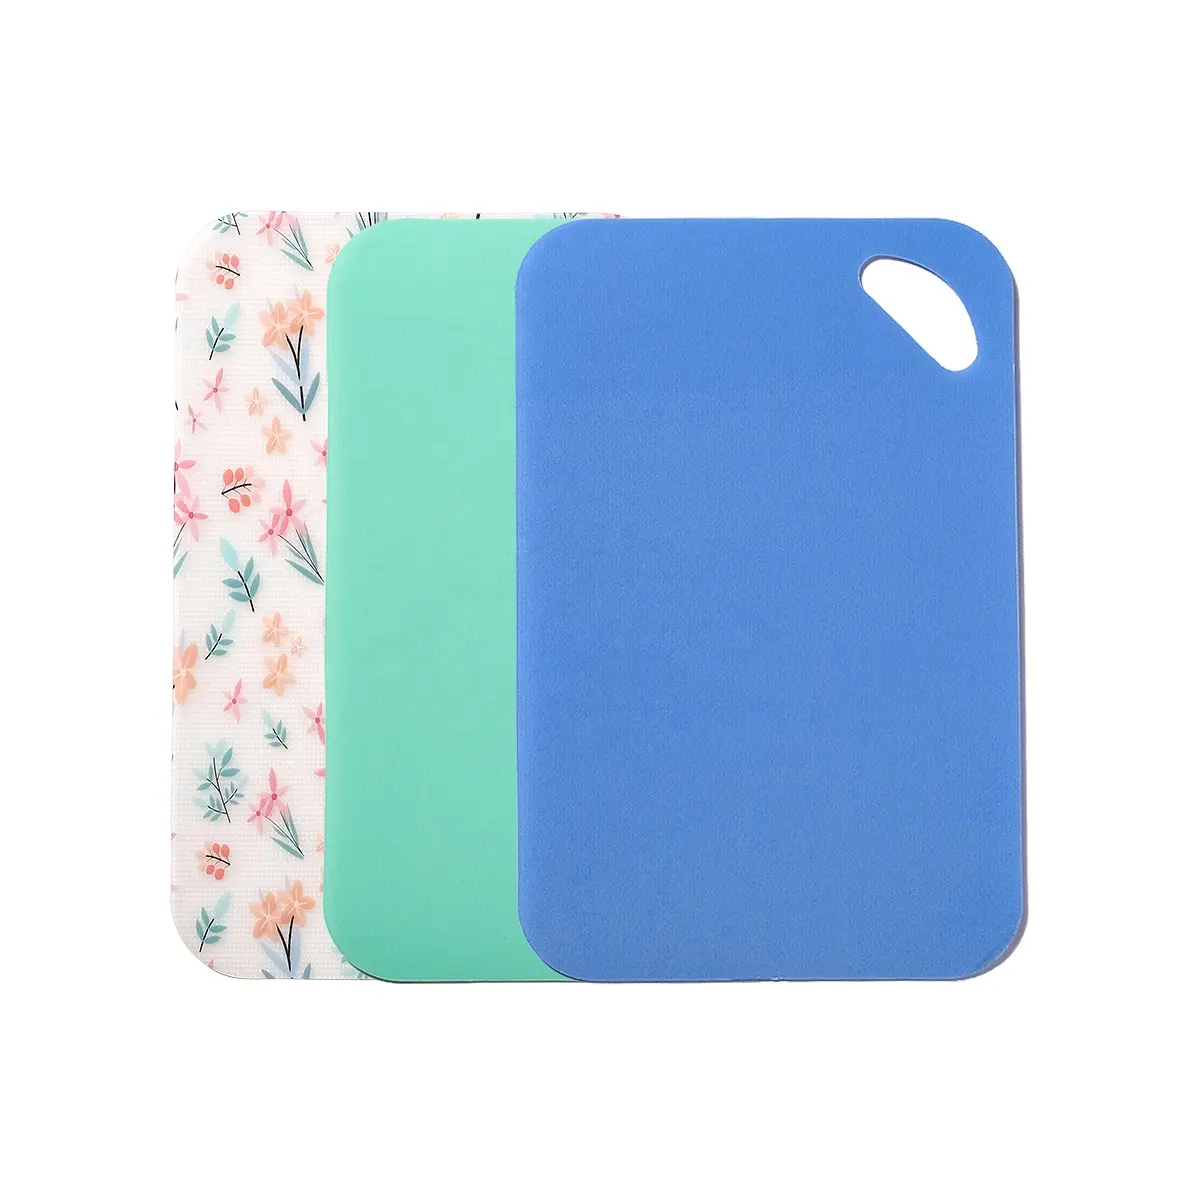 Design personalizado Non-Slip Placa De Corte De Plástico Colorido Fino Pp Chopping Boards Set